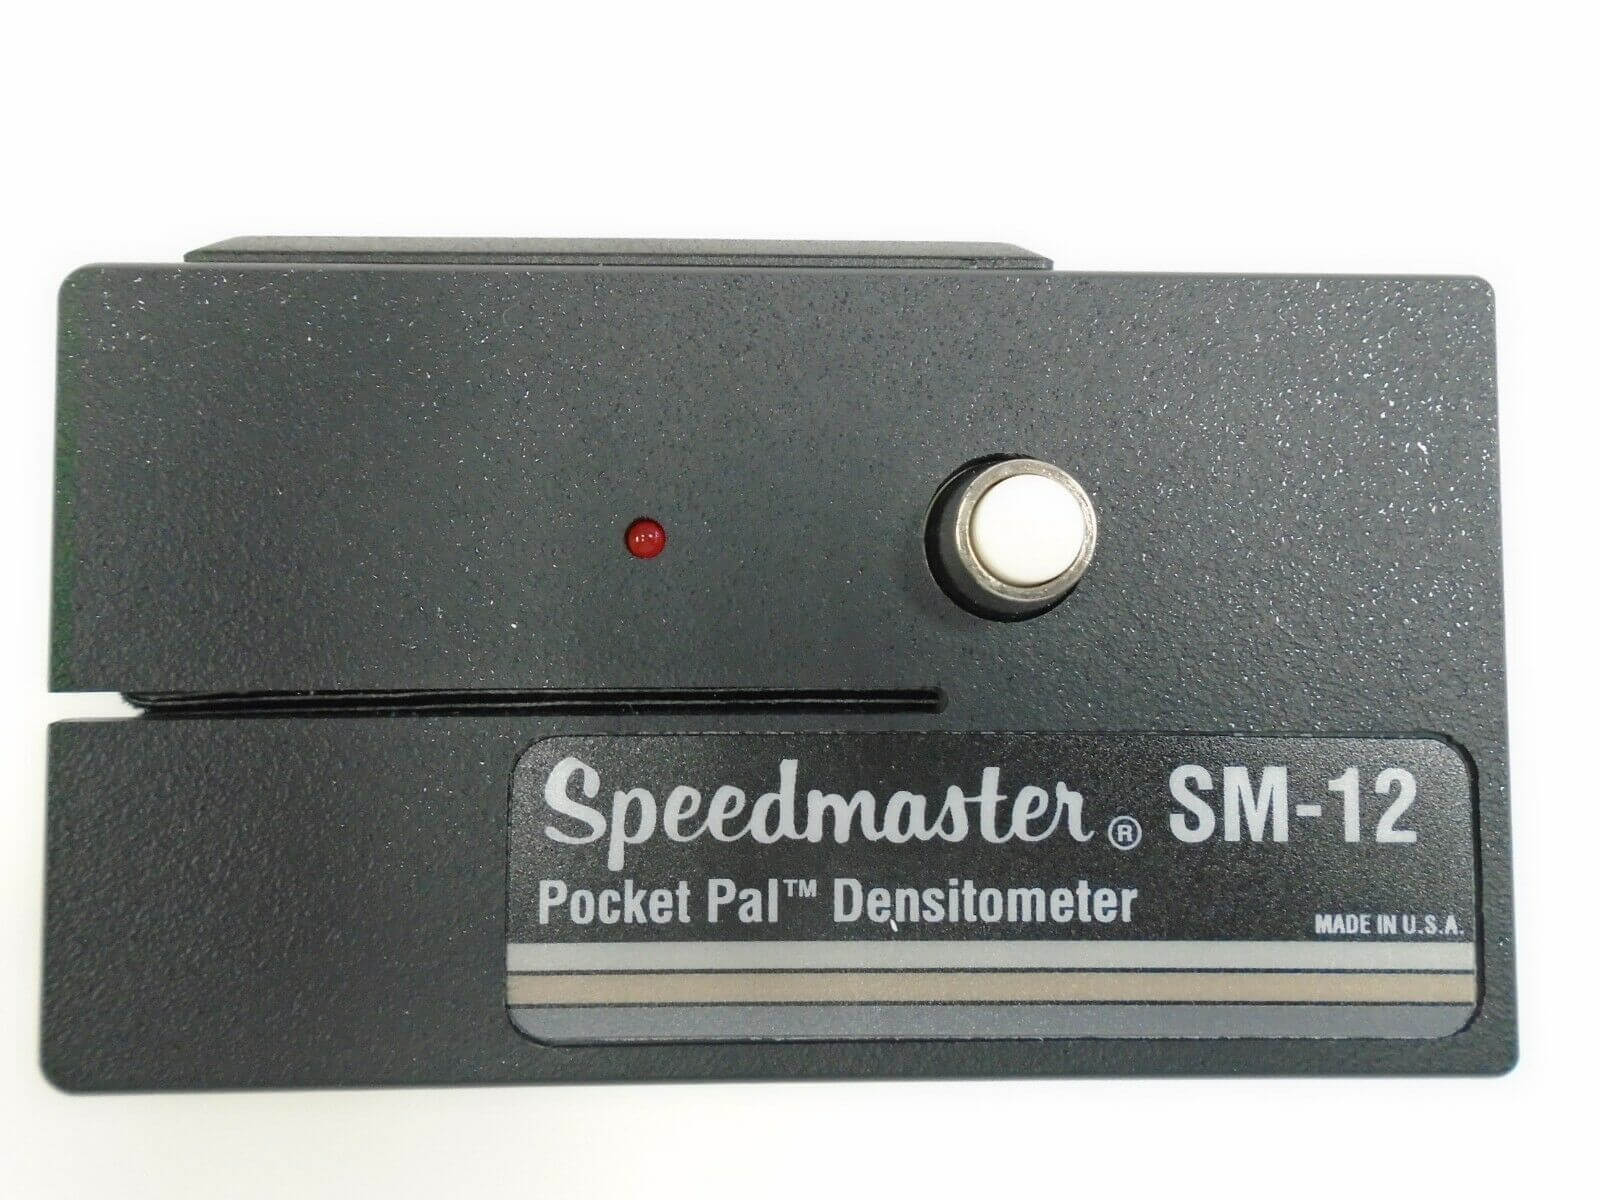 Portable Densitometer SM-12 Pocket Pal